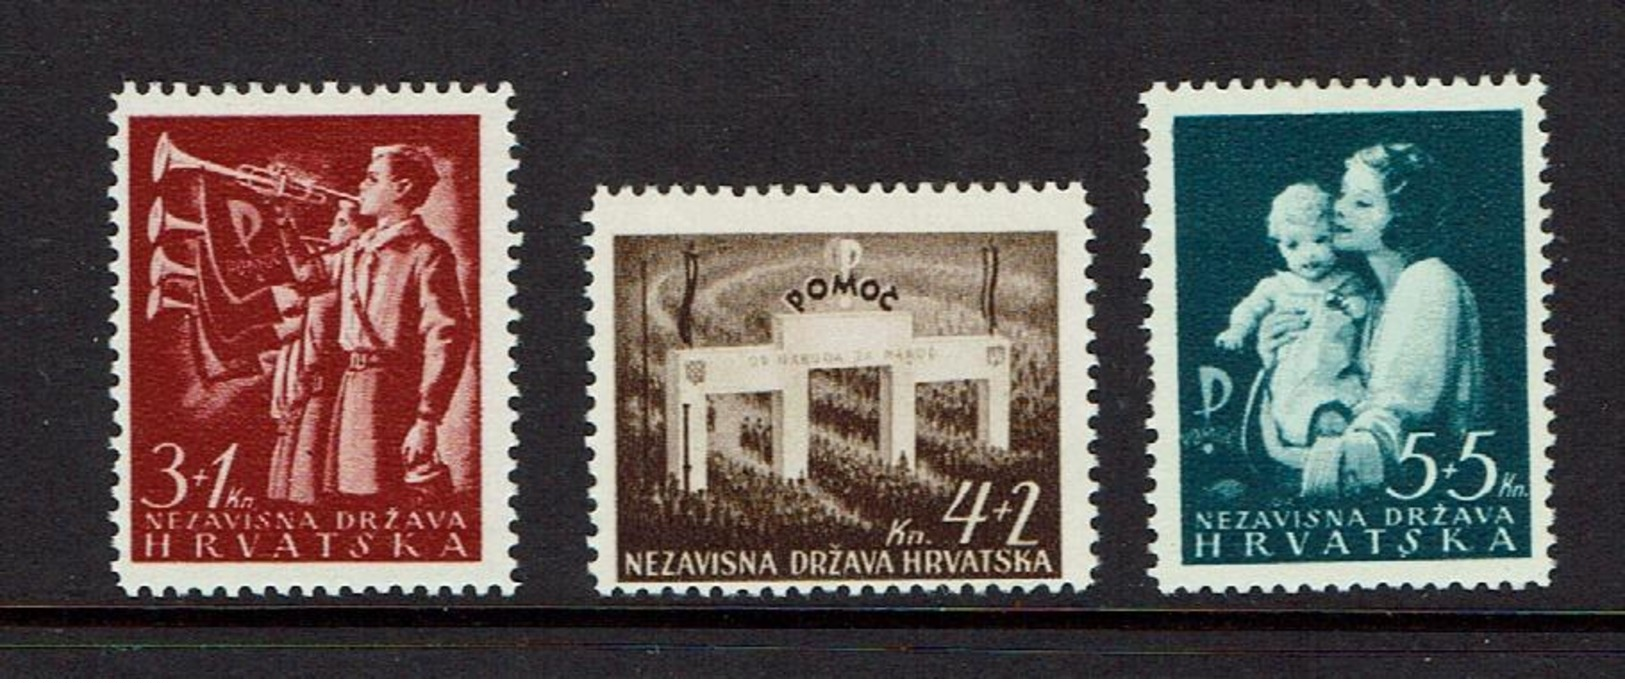 CROATIA...1940'S..mh - Croatia